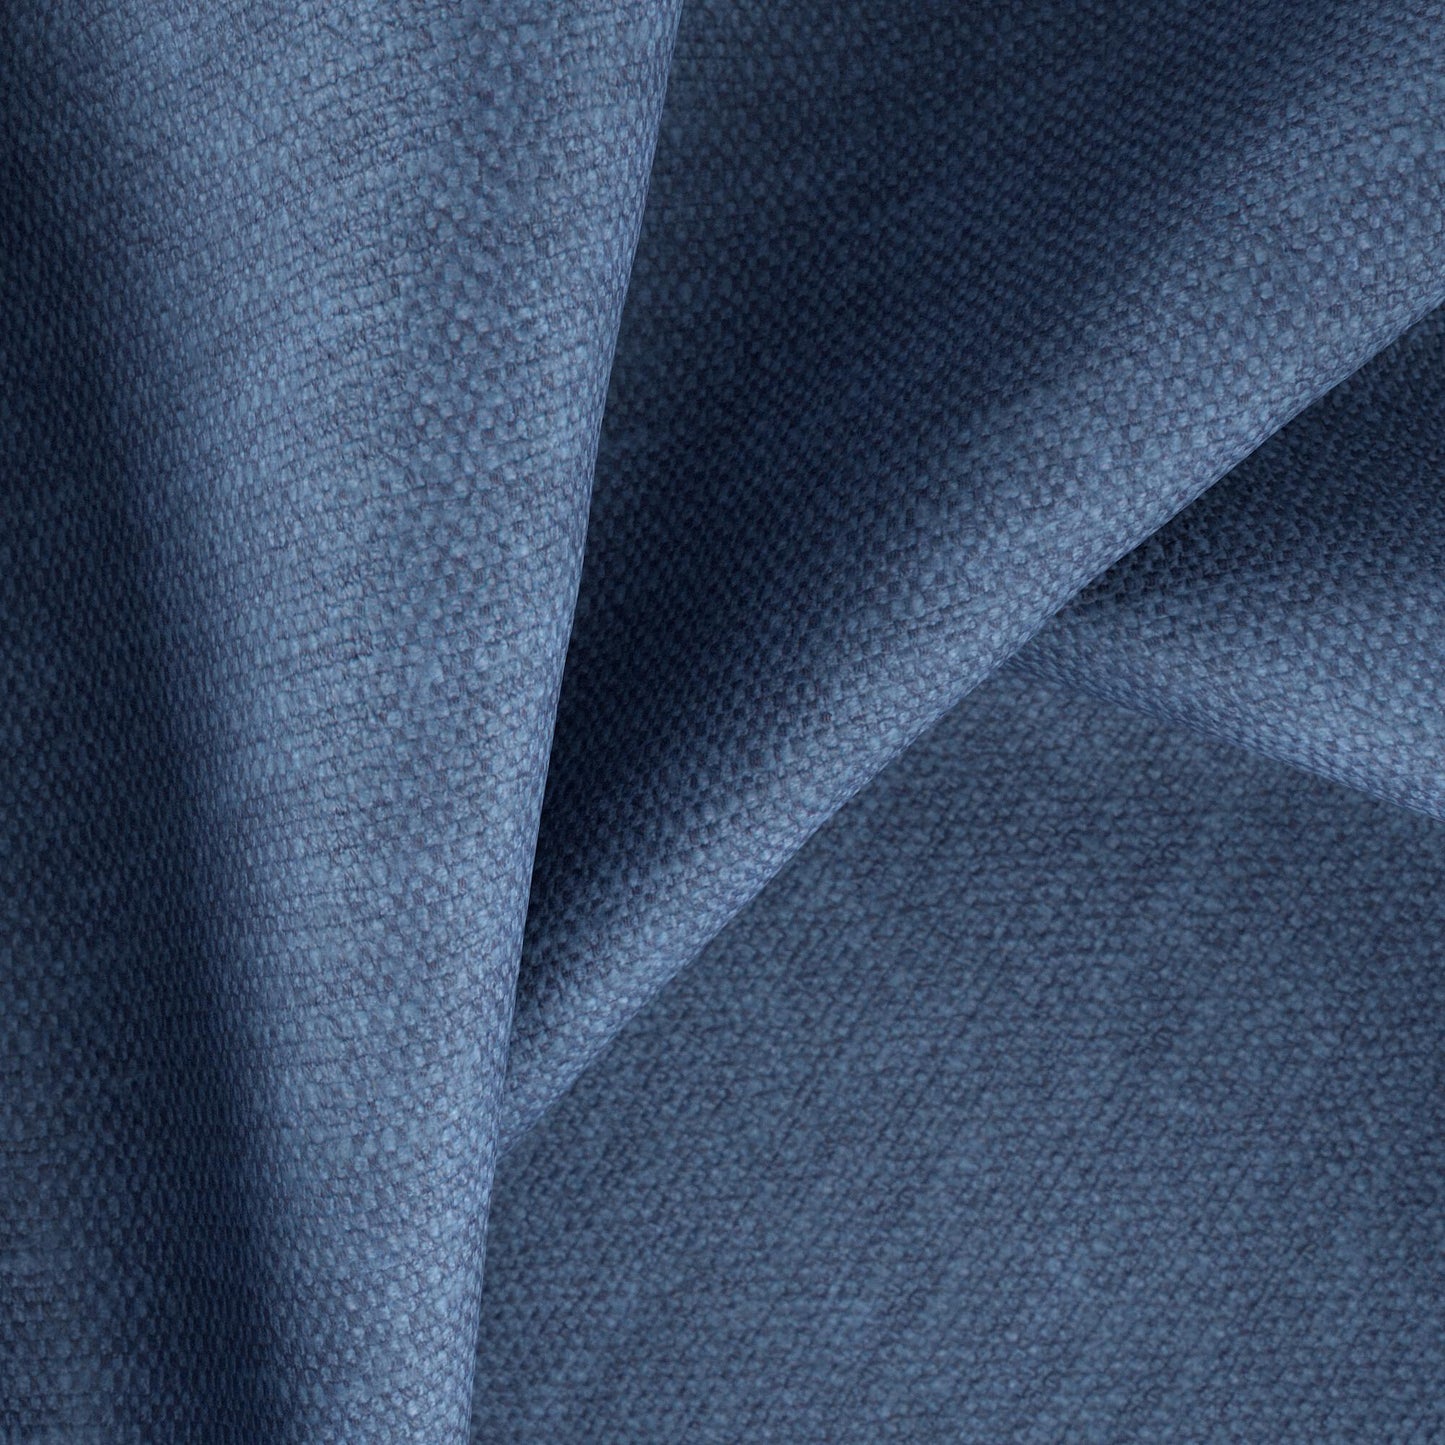 Home Fabrics - FibreGuard - Colourwash - 38-Cadet - Fabric per Meter